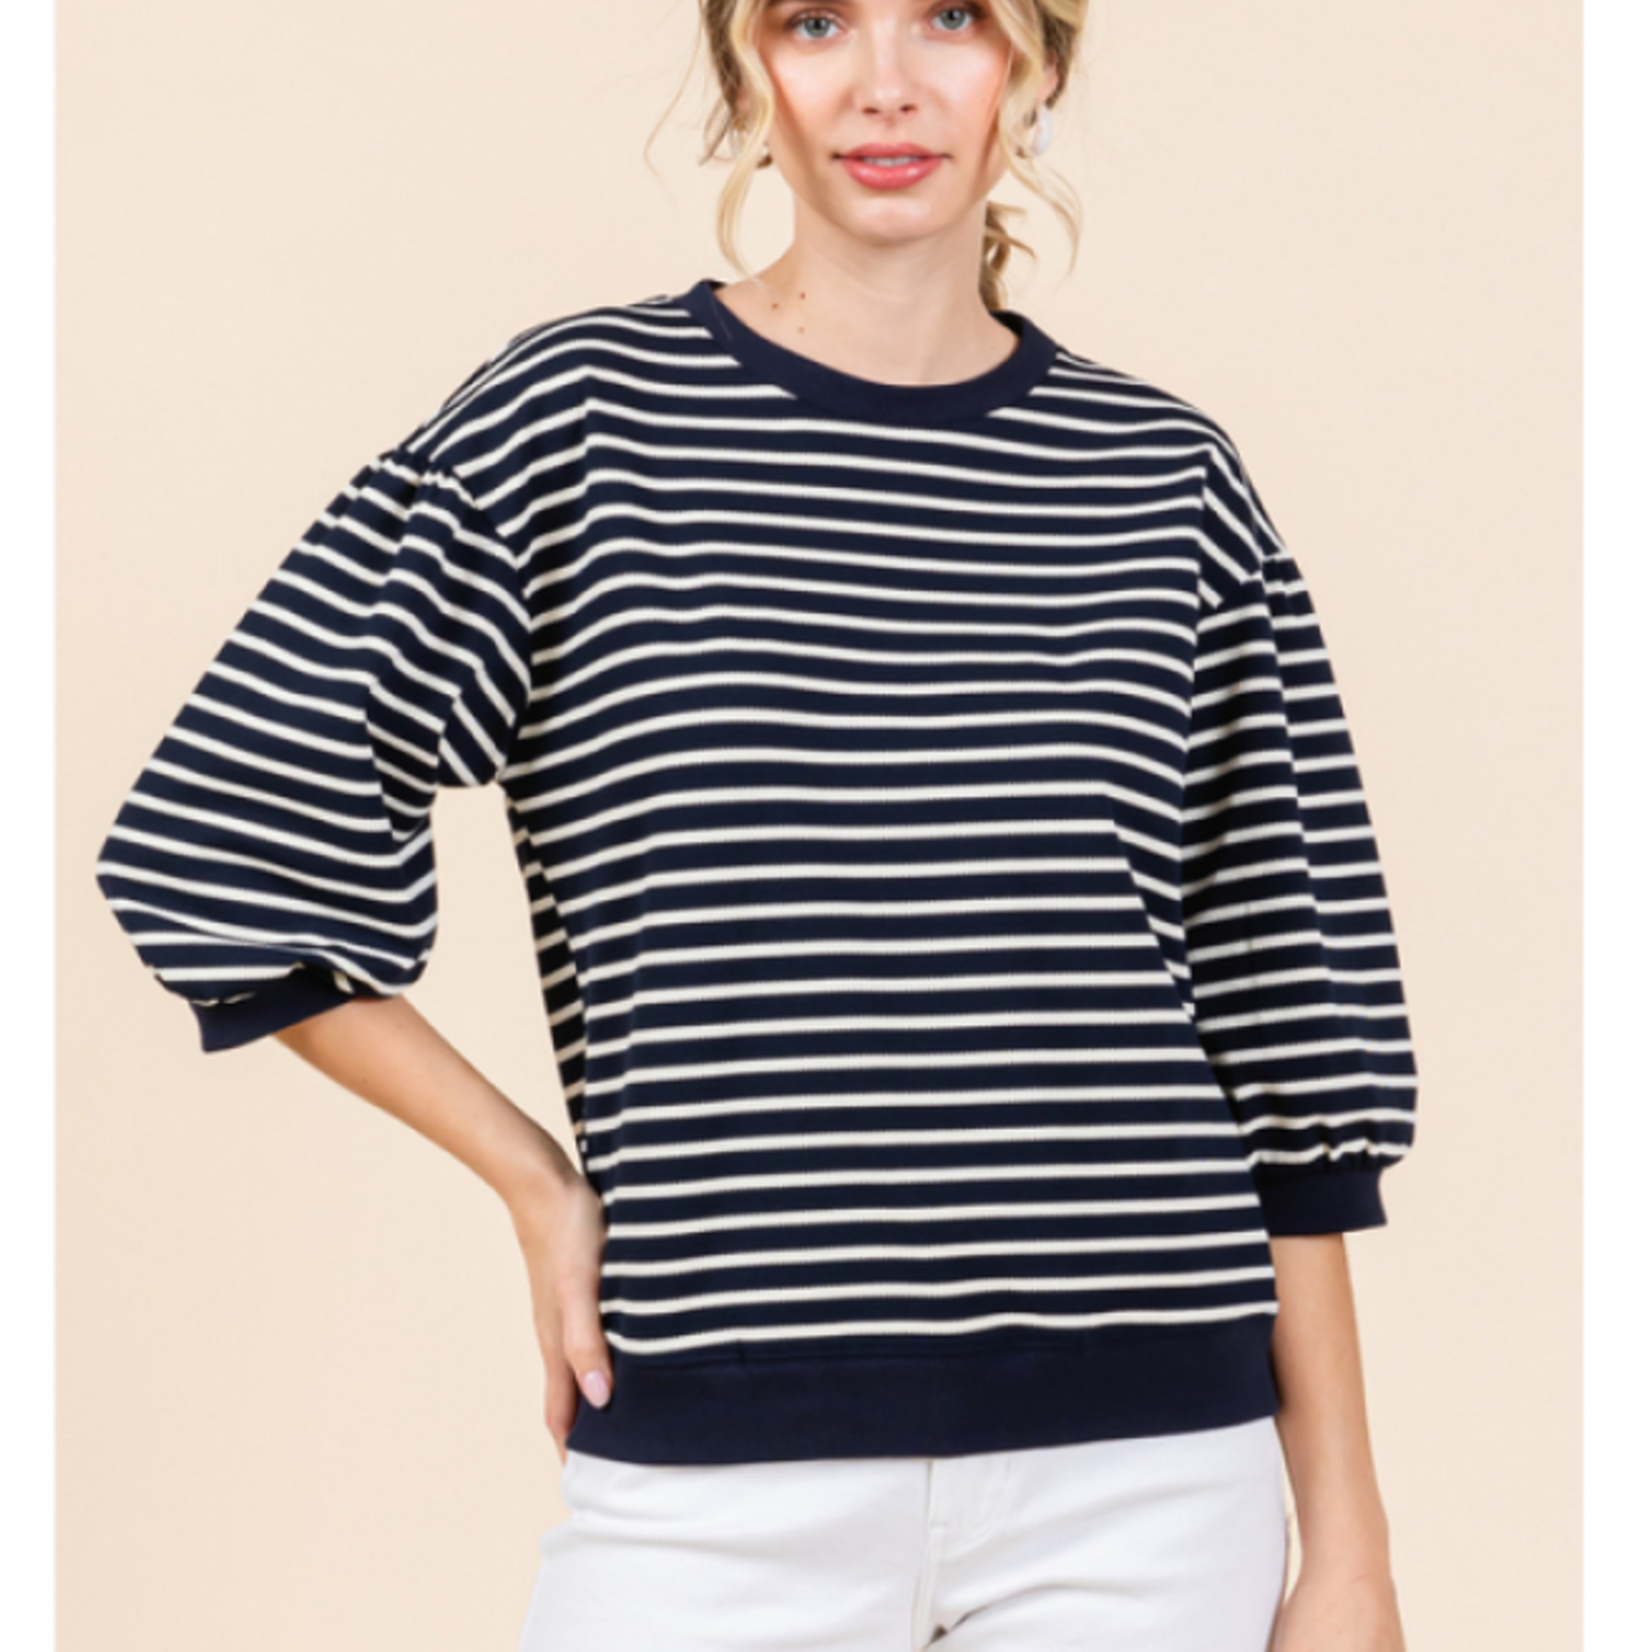 Jodifl Quarter Sleeve Sweater Blouse with Black Stripes